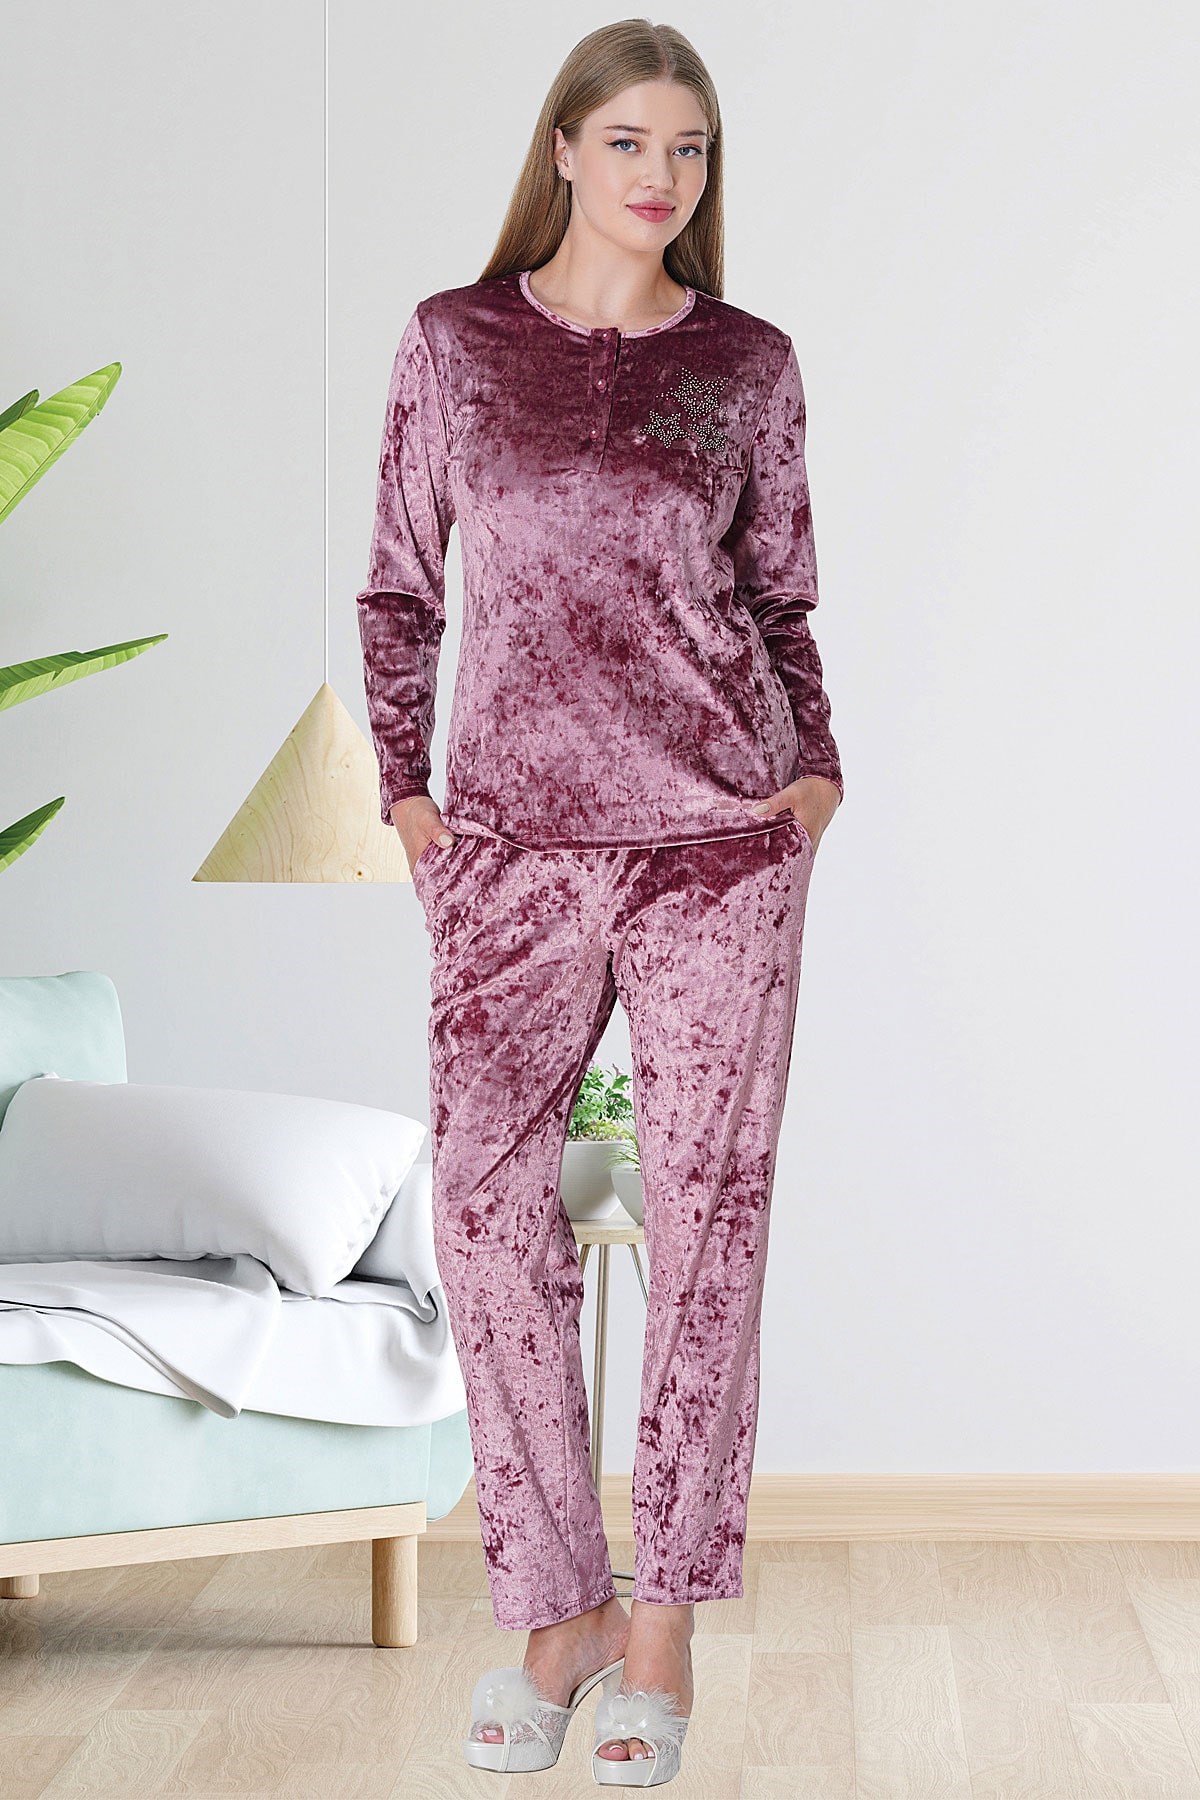 Mecit 5721 Gül Kurusu Kadife Kadın Pijama Takımı | Mecit Pijama